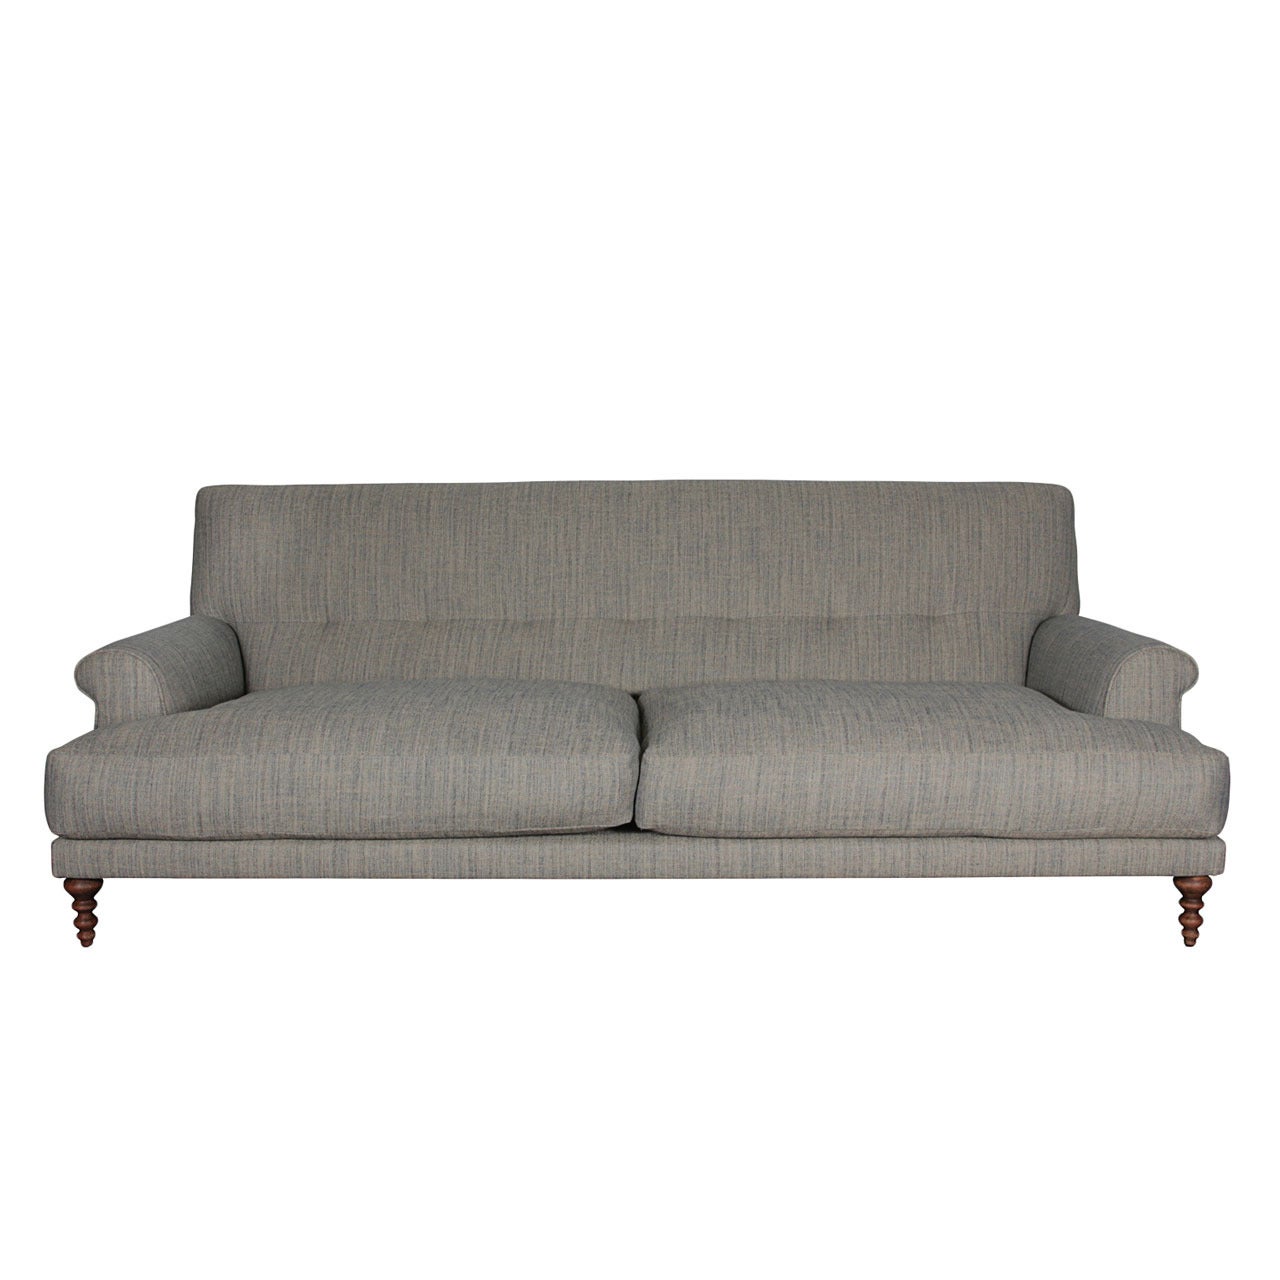 Matthew Hilton for SCP Three-Seat Oscar Sofa in Soft Tweed For Sale